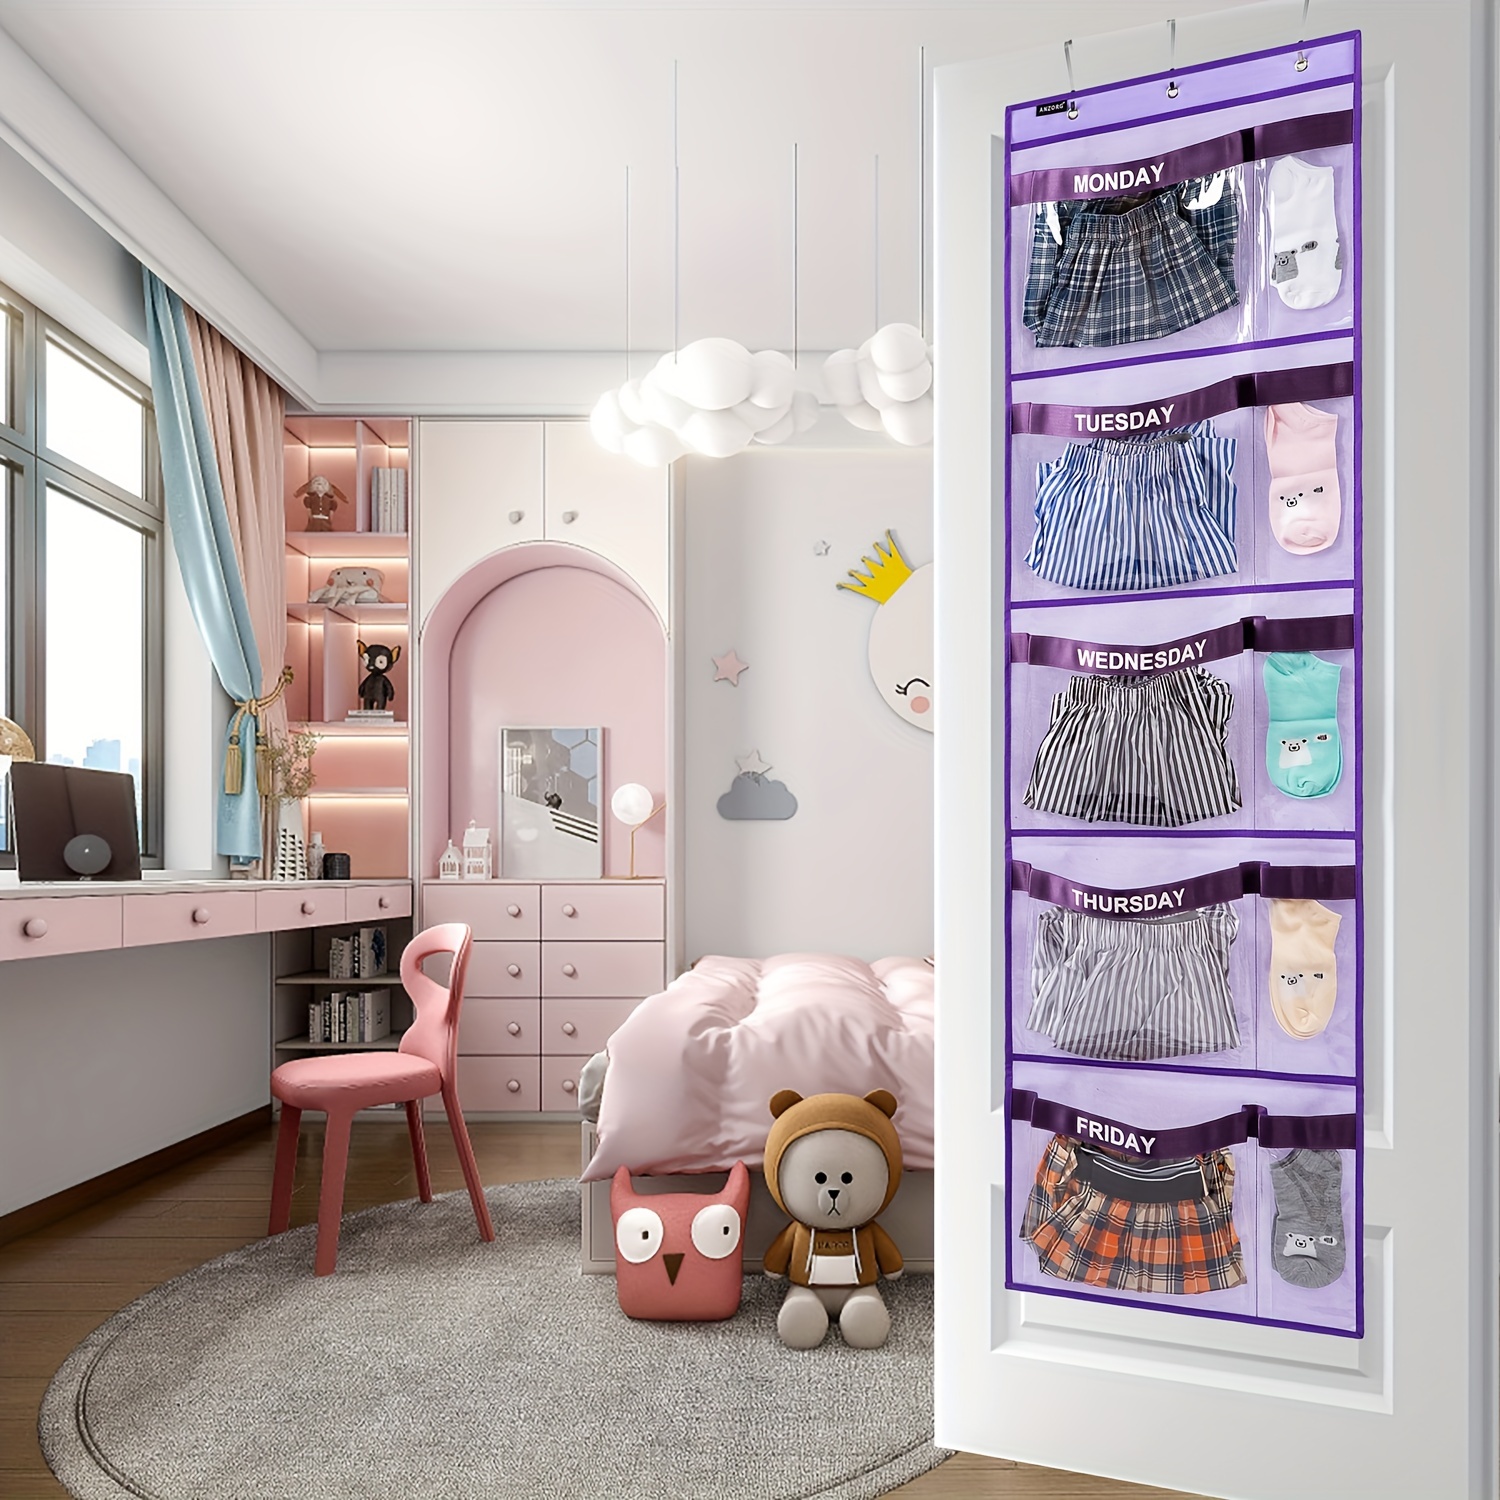 DIMJ Storage Bins, 3 Pcs Large Foldable Fabric Storage Bin Organizer with Clear Window for Bedroom Kids Room Wardrobe Closet Shelves, Home Storage